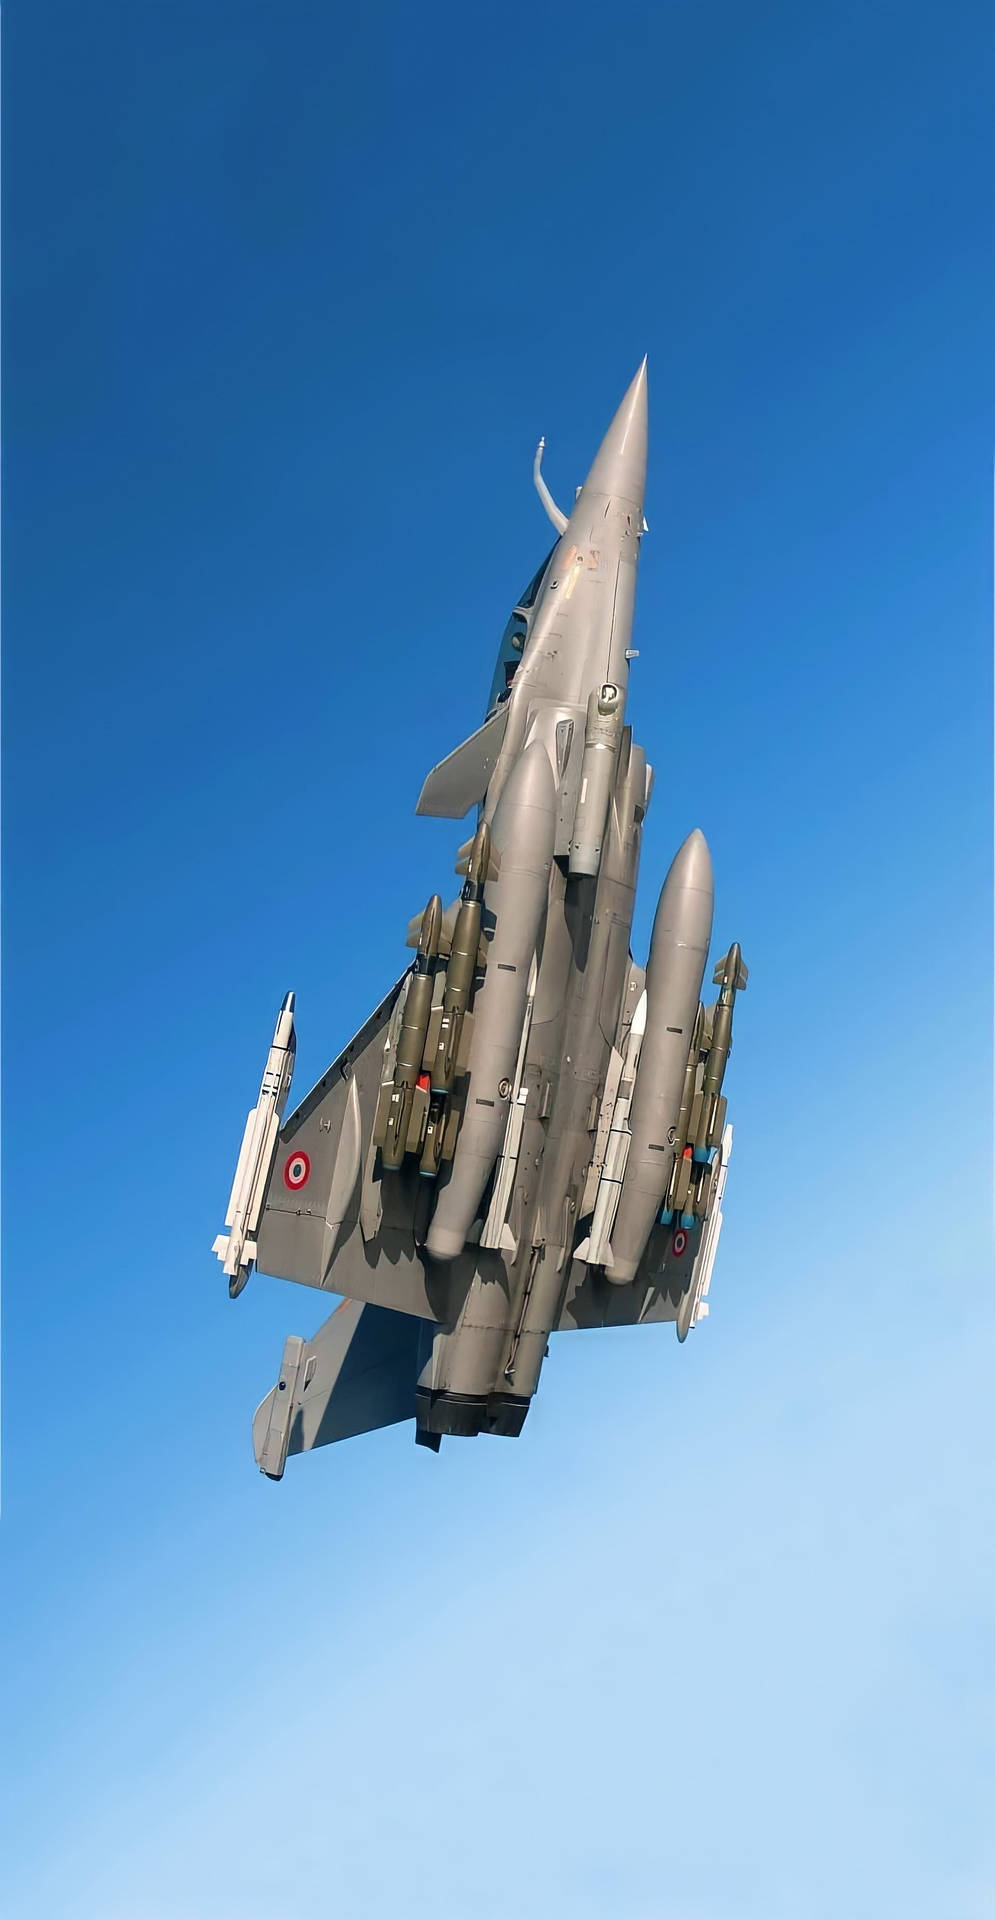 220+ 4K Jet Fighter Wallpapers | Background Images